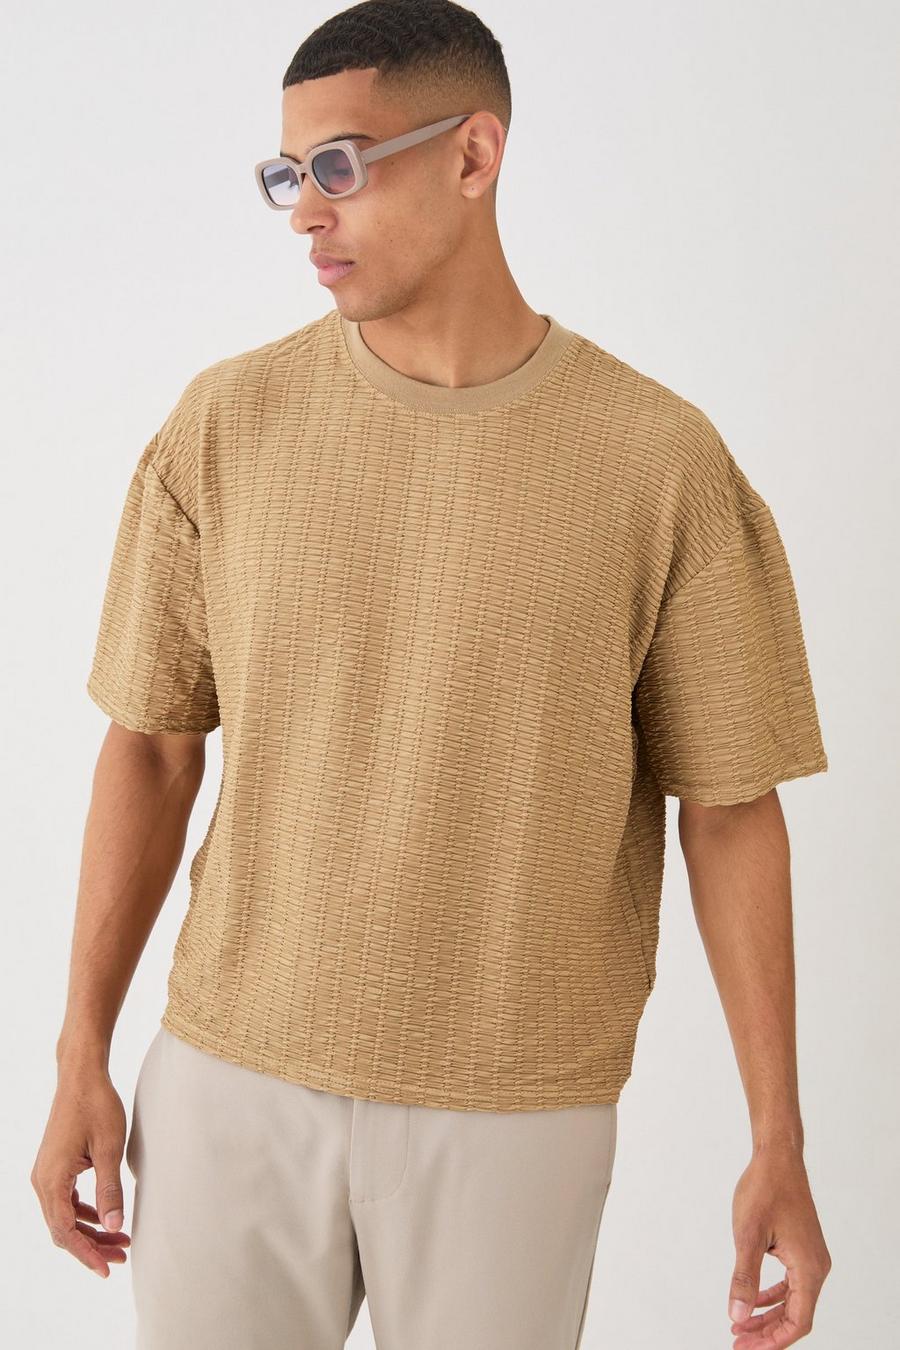 Tan Oversized Boxy Pleated Texture T-shirt